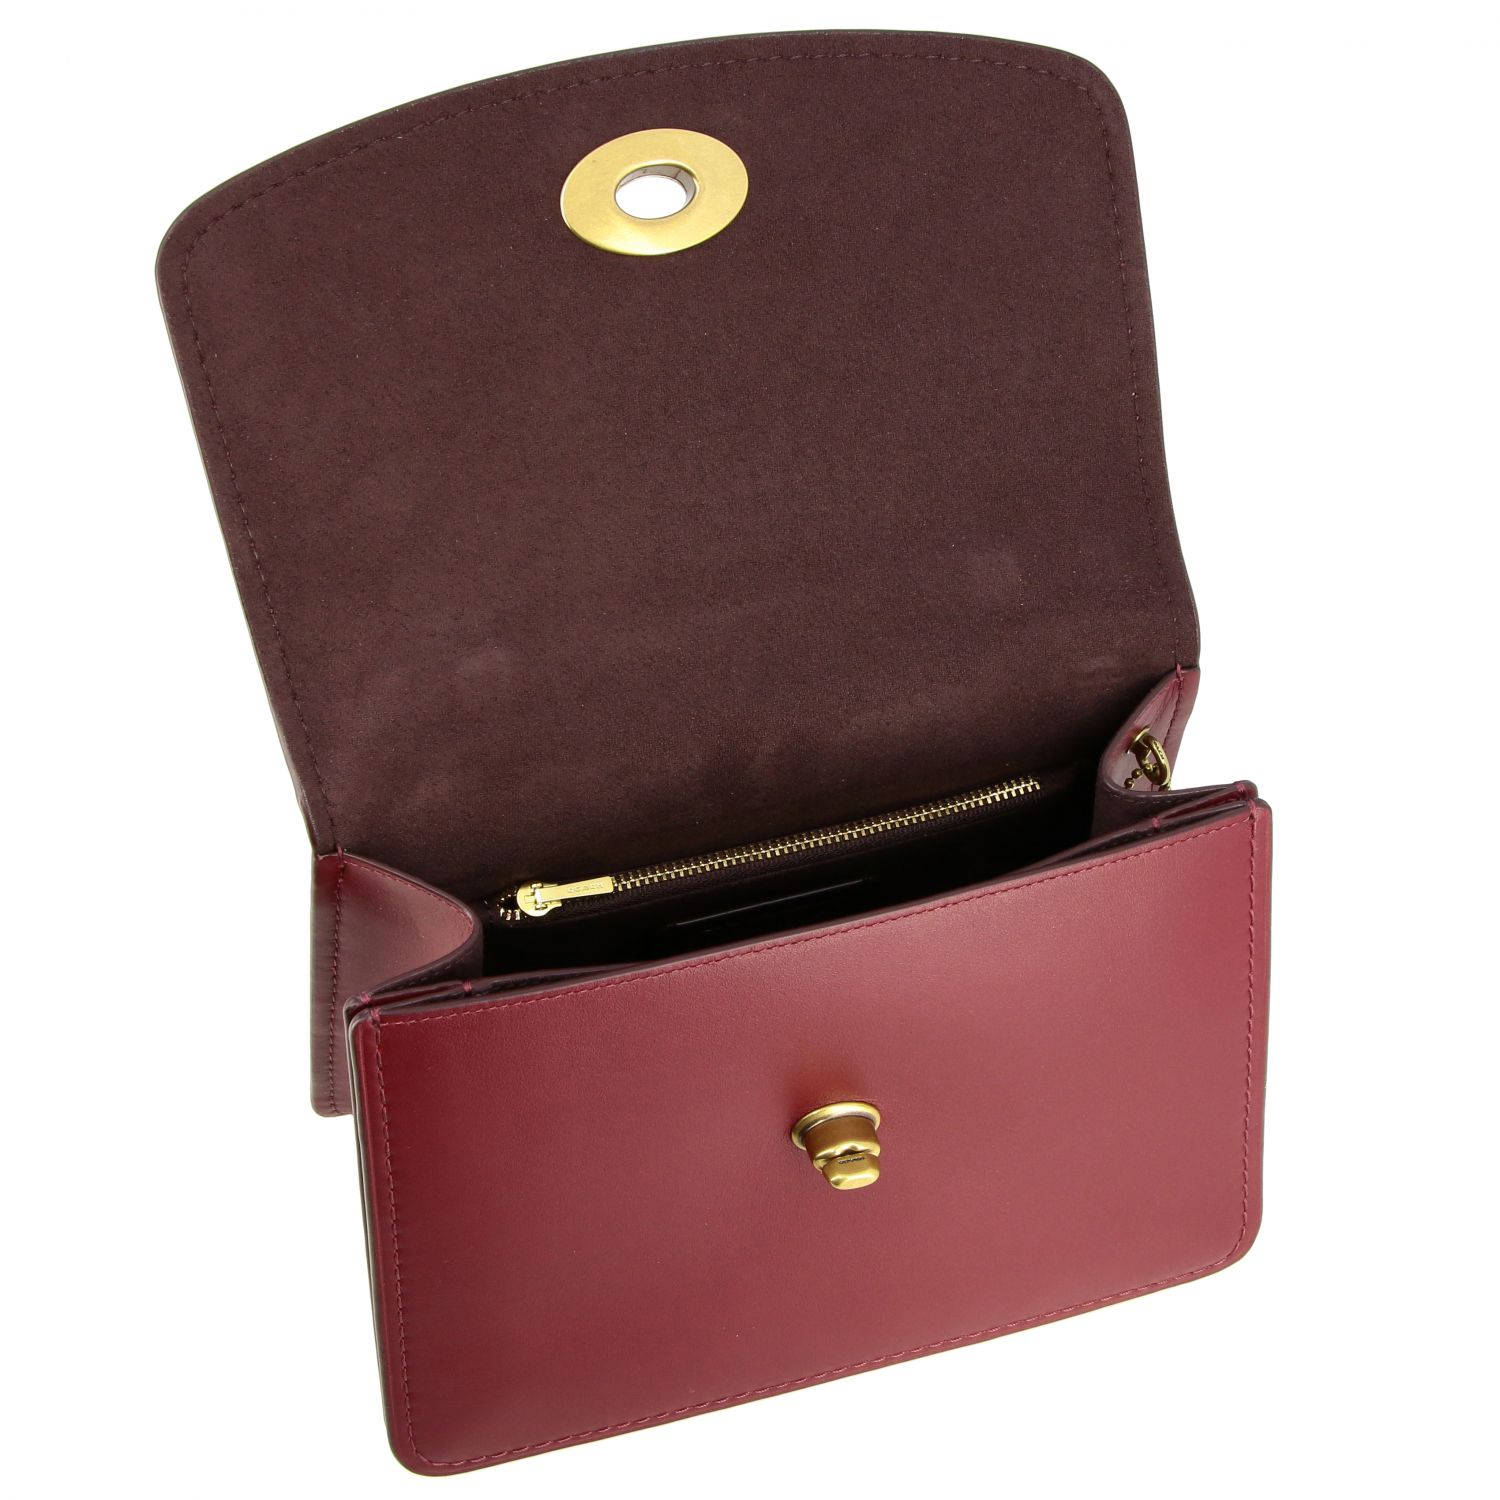 Coach Outlet: Parker bag in smooth leather - Burgundy | Coach handbag ...